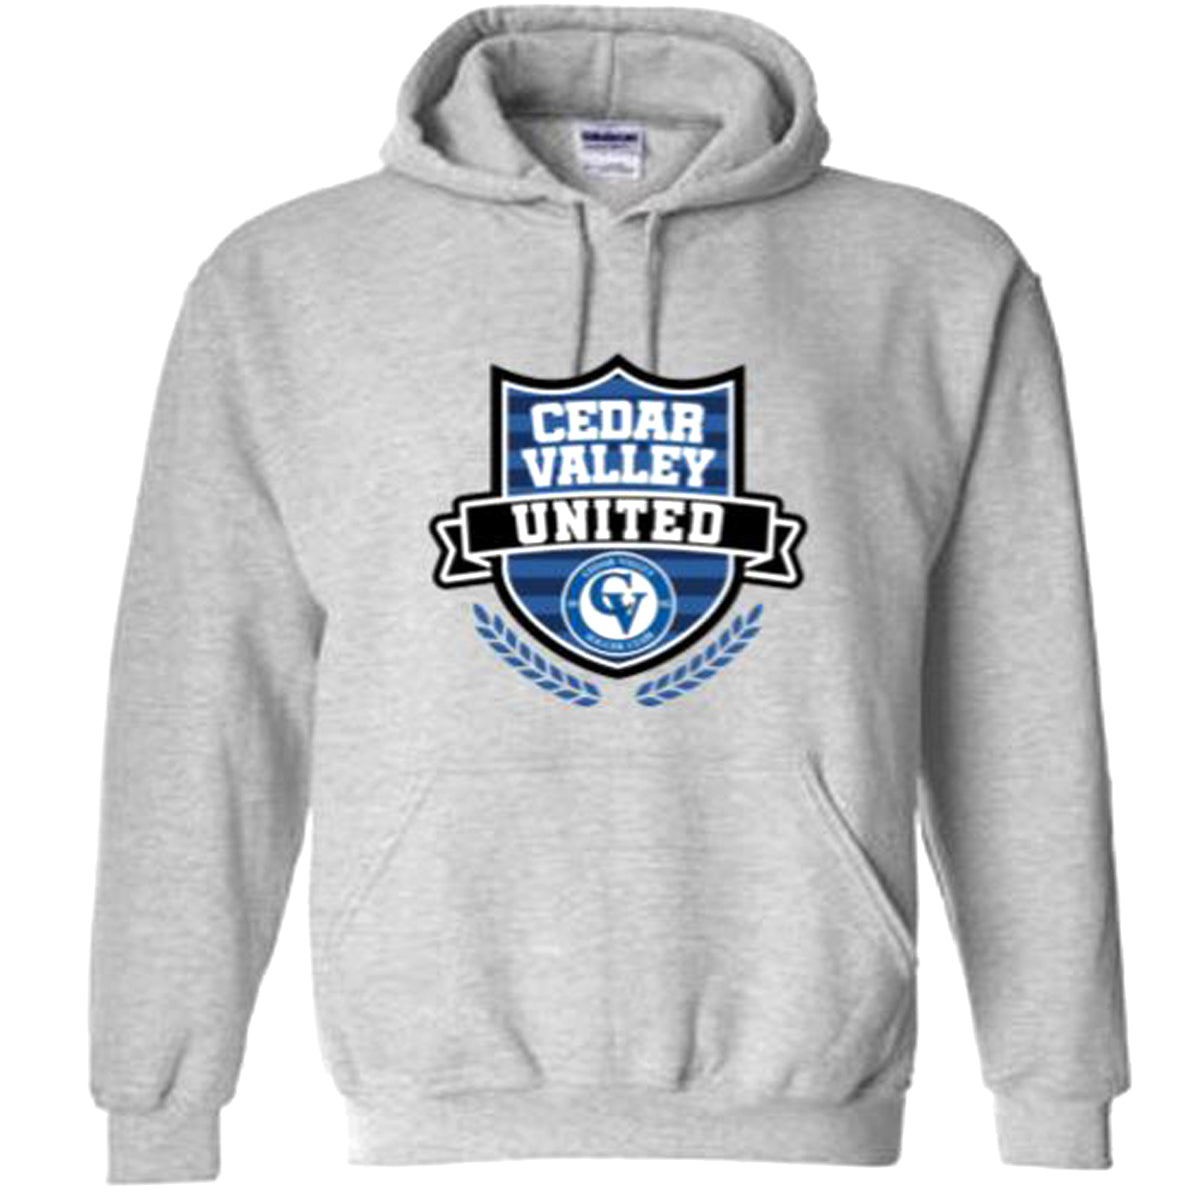 Cedar Valley Soccer Club Heavy Blend Hooded Sweatshirt Sweatshirt Gildan Men's Small Sport Grey 